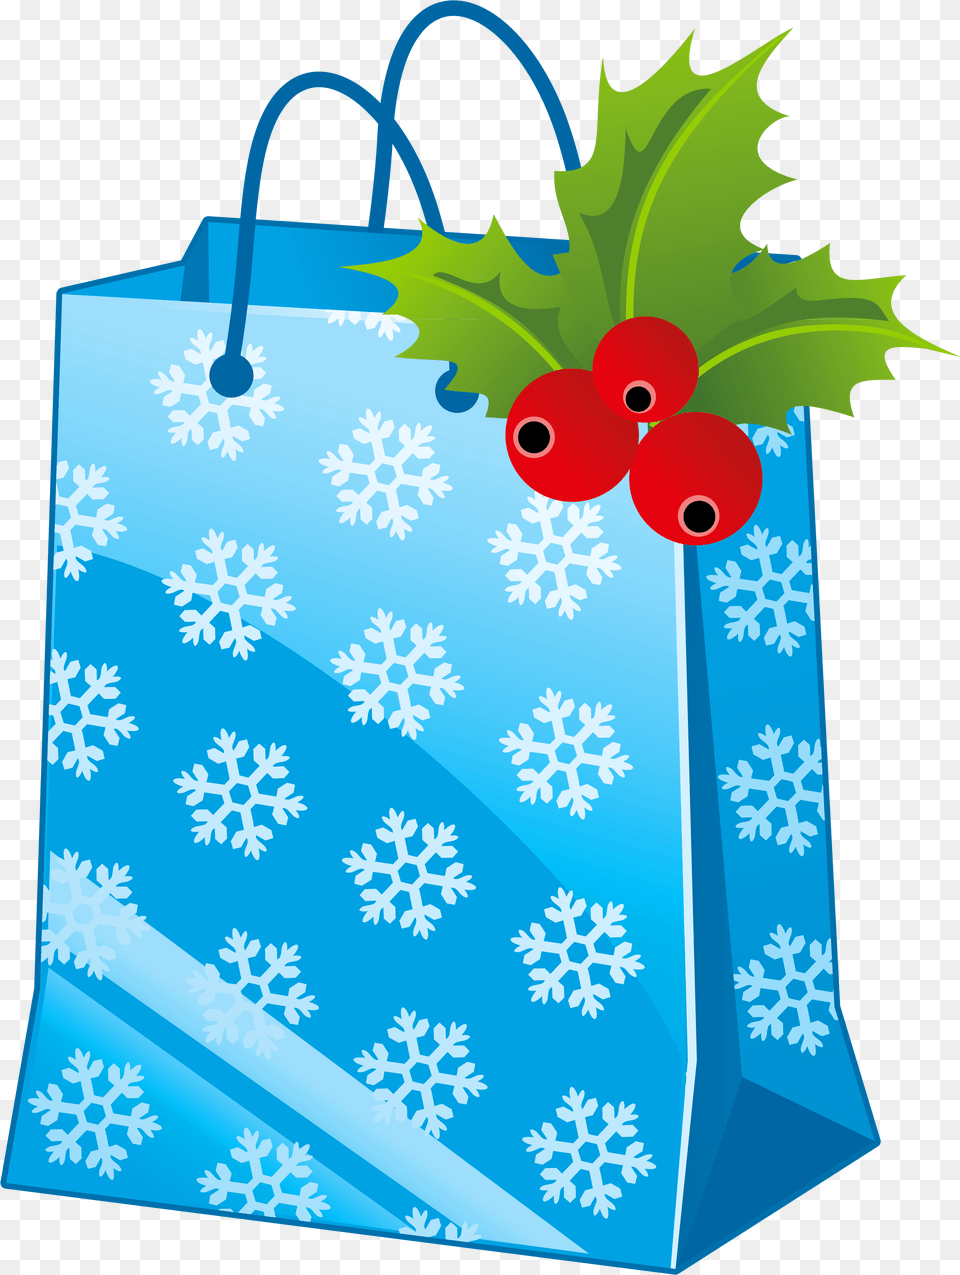 Library Of Christmas Shopping Bag Vector Stock Gift Bag Clipart, Flag, Shopping Bag Png Image